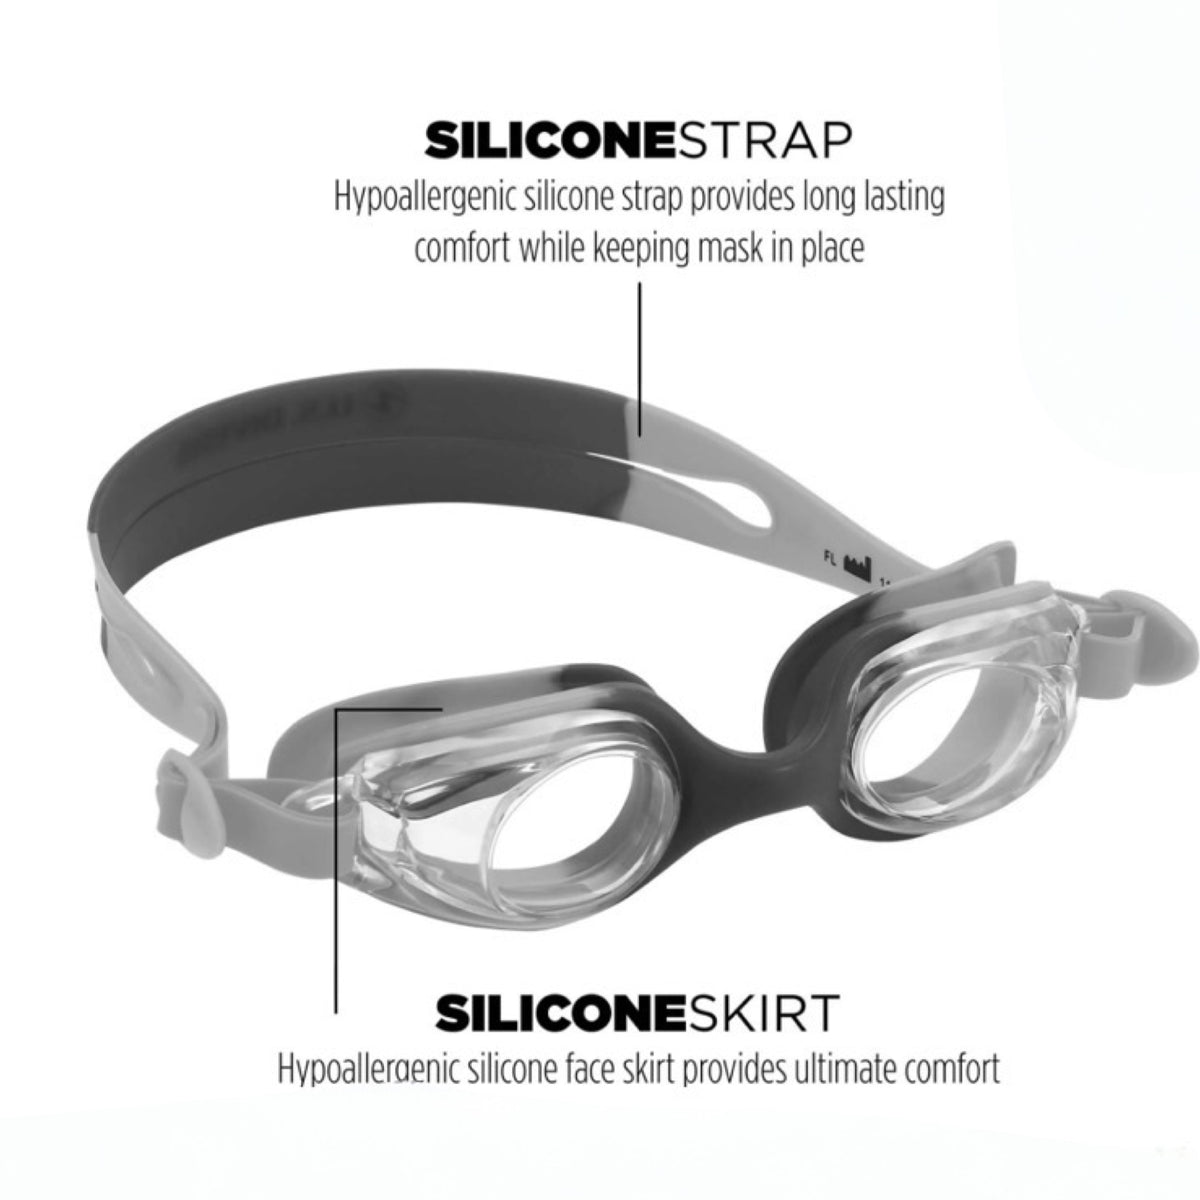 US Diver Kids 4+ Splash Swim Goggles Anti Fog - Shatter Resistant